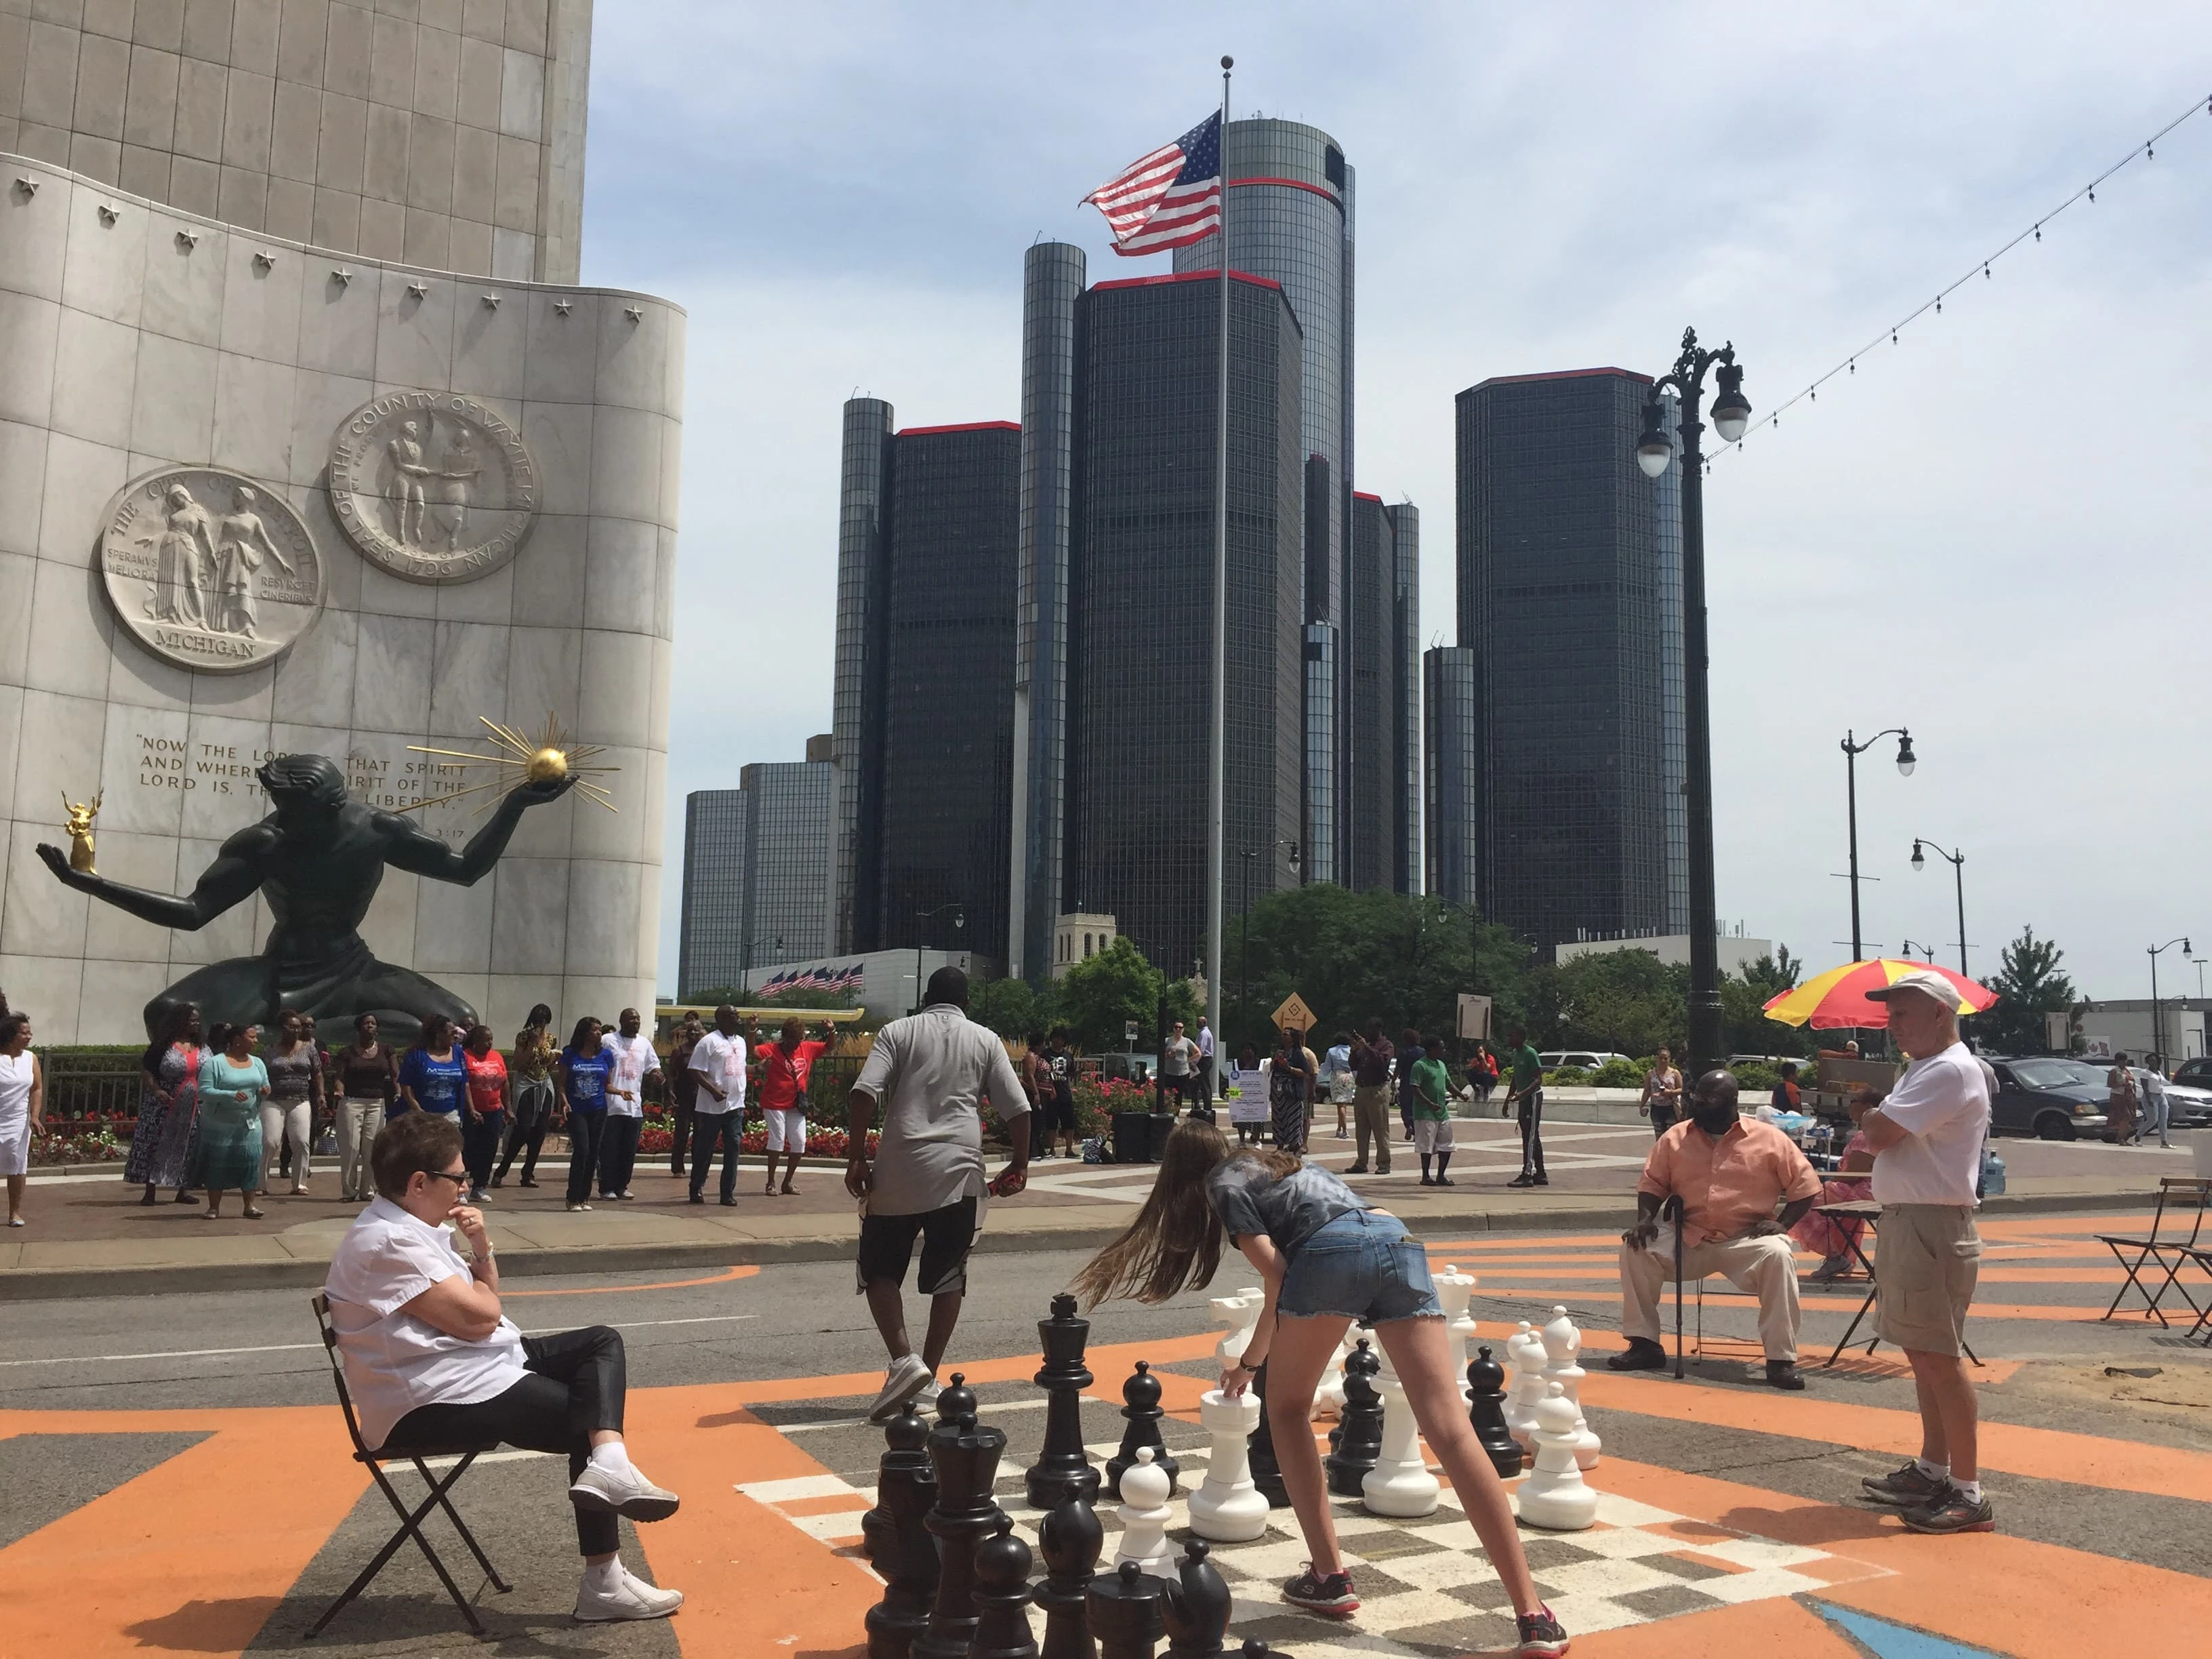 Impact of the Spirit Plaza in Detroit